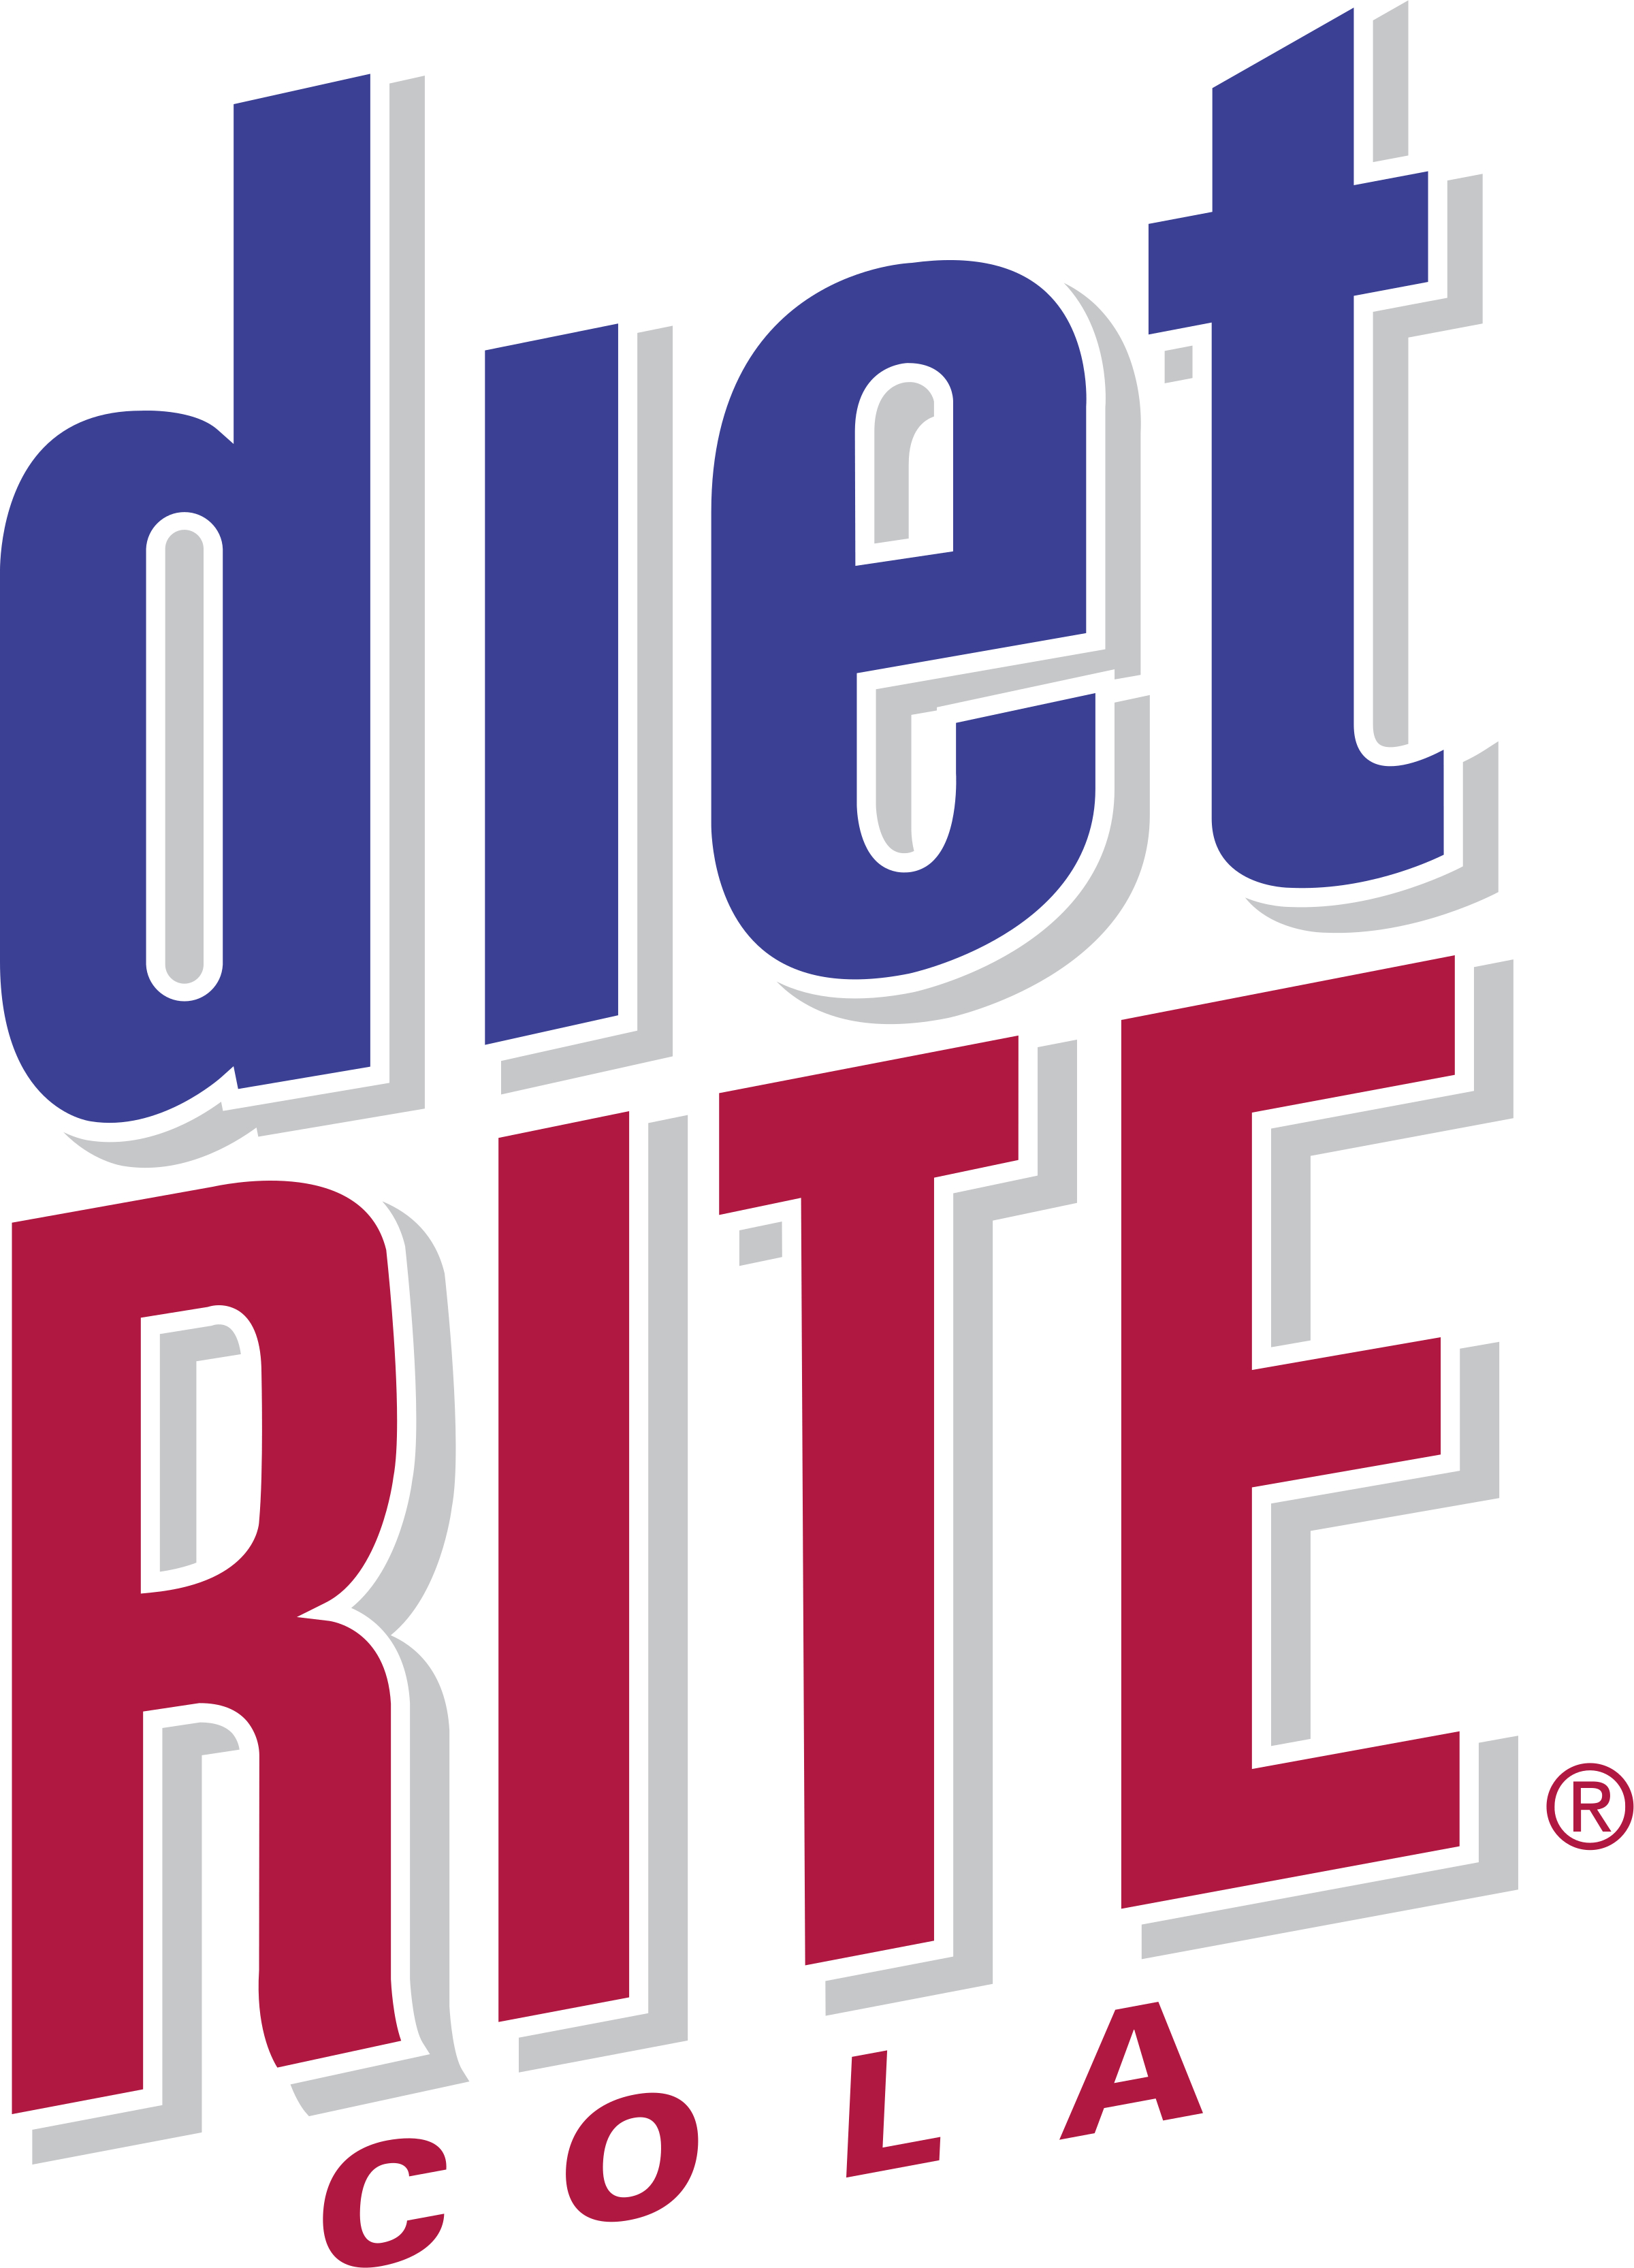 Red Rite Logo - Diet Rite Cola 1 Logo PNG Transparent & SVG Vector - Freebie Supply